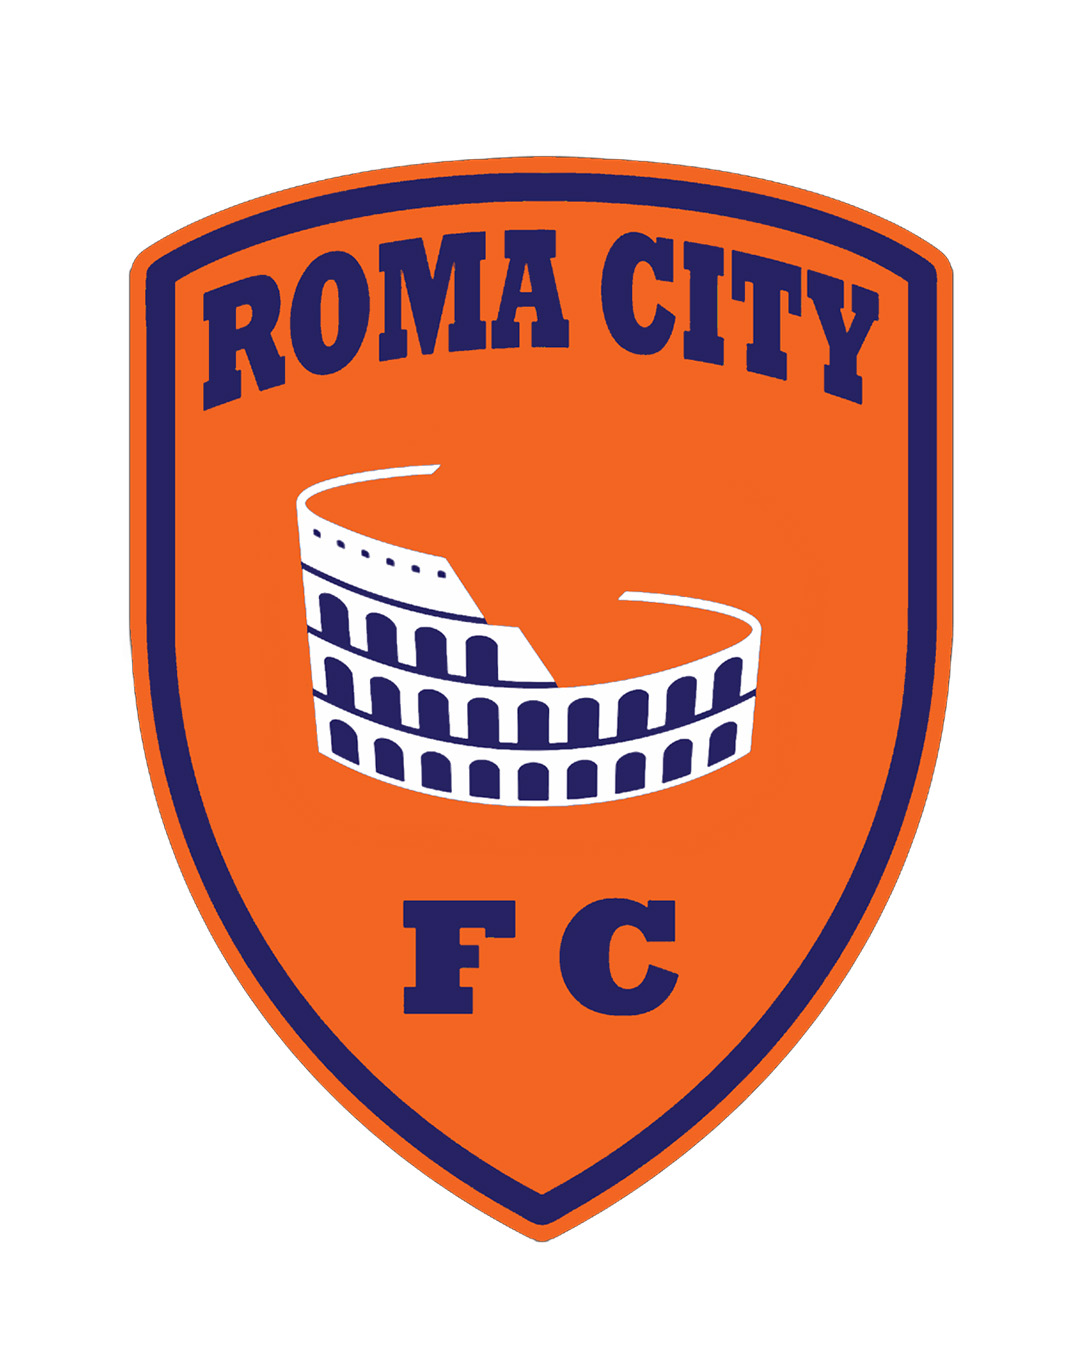 Roma City F.C.